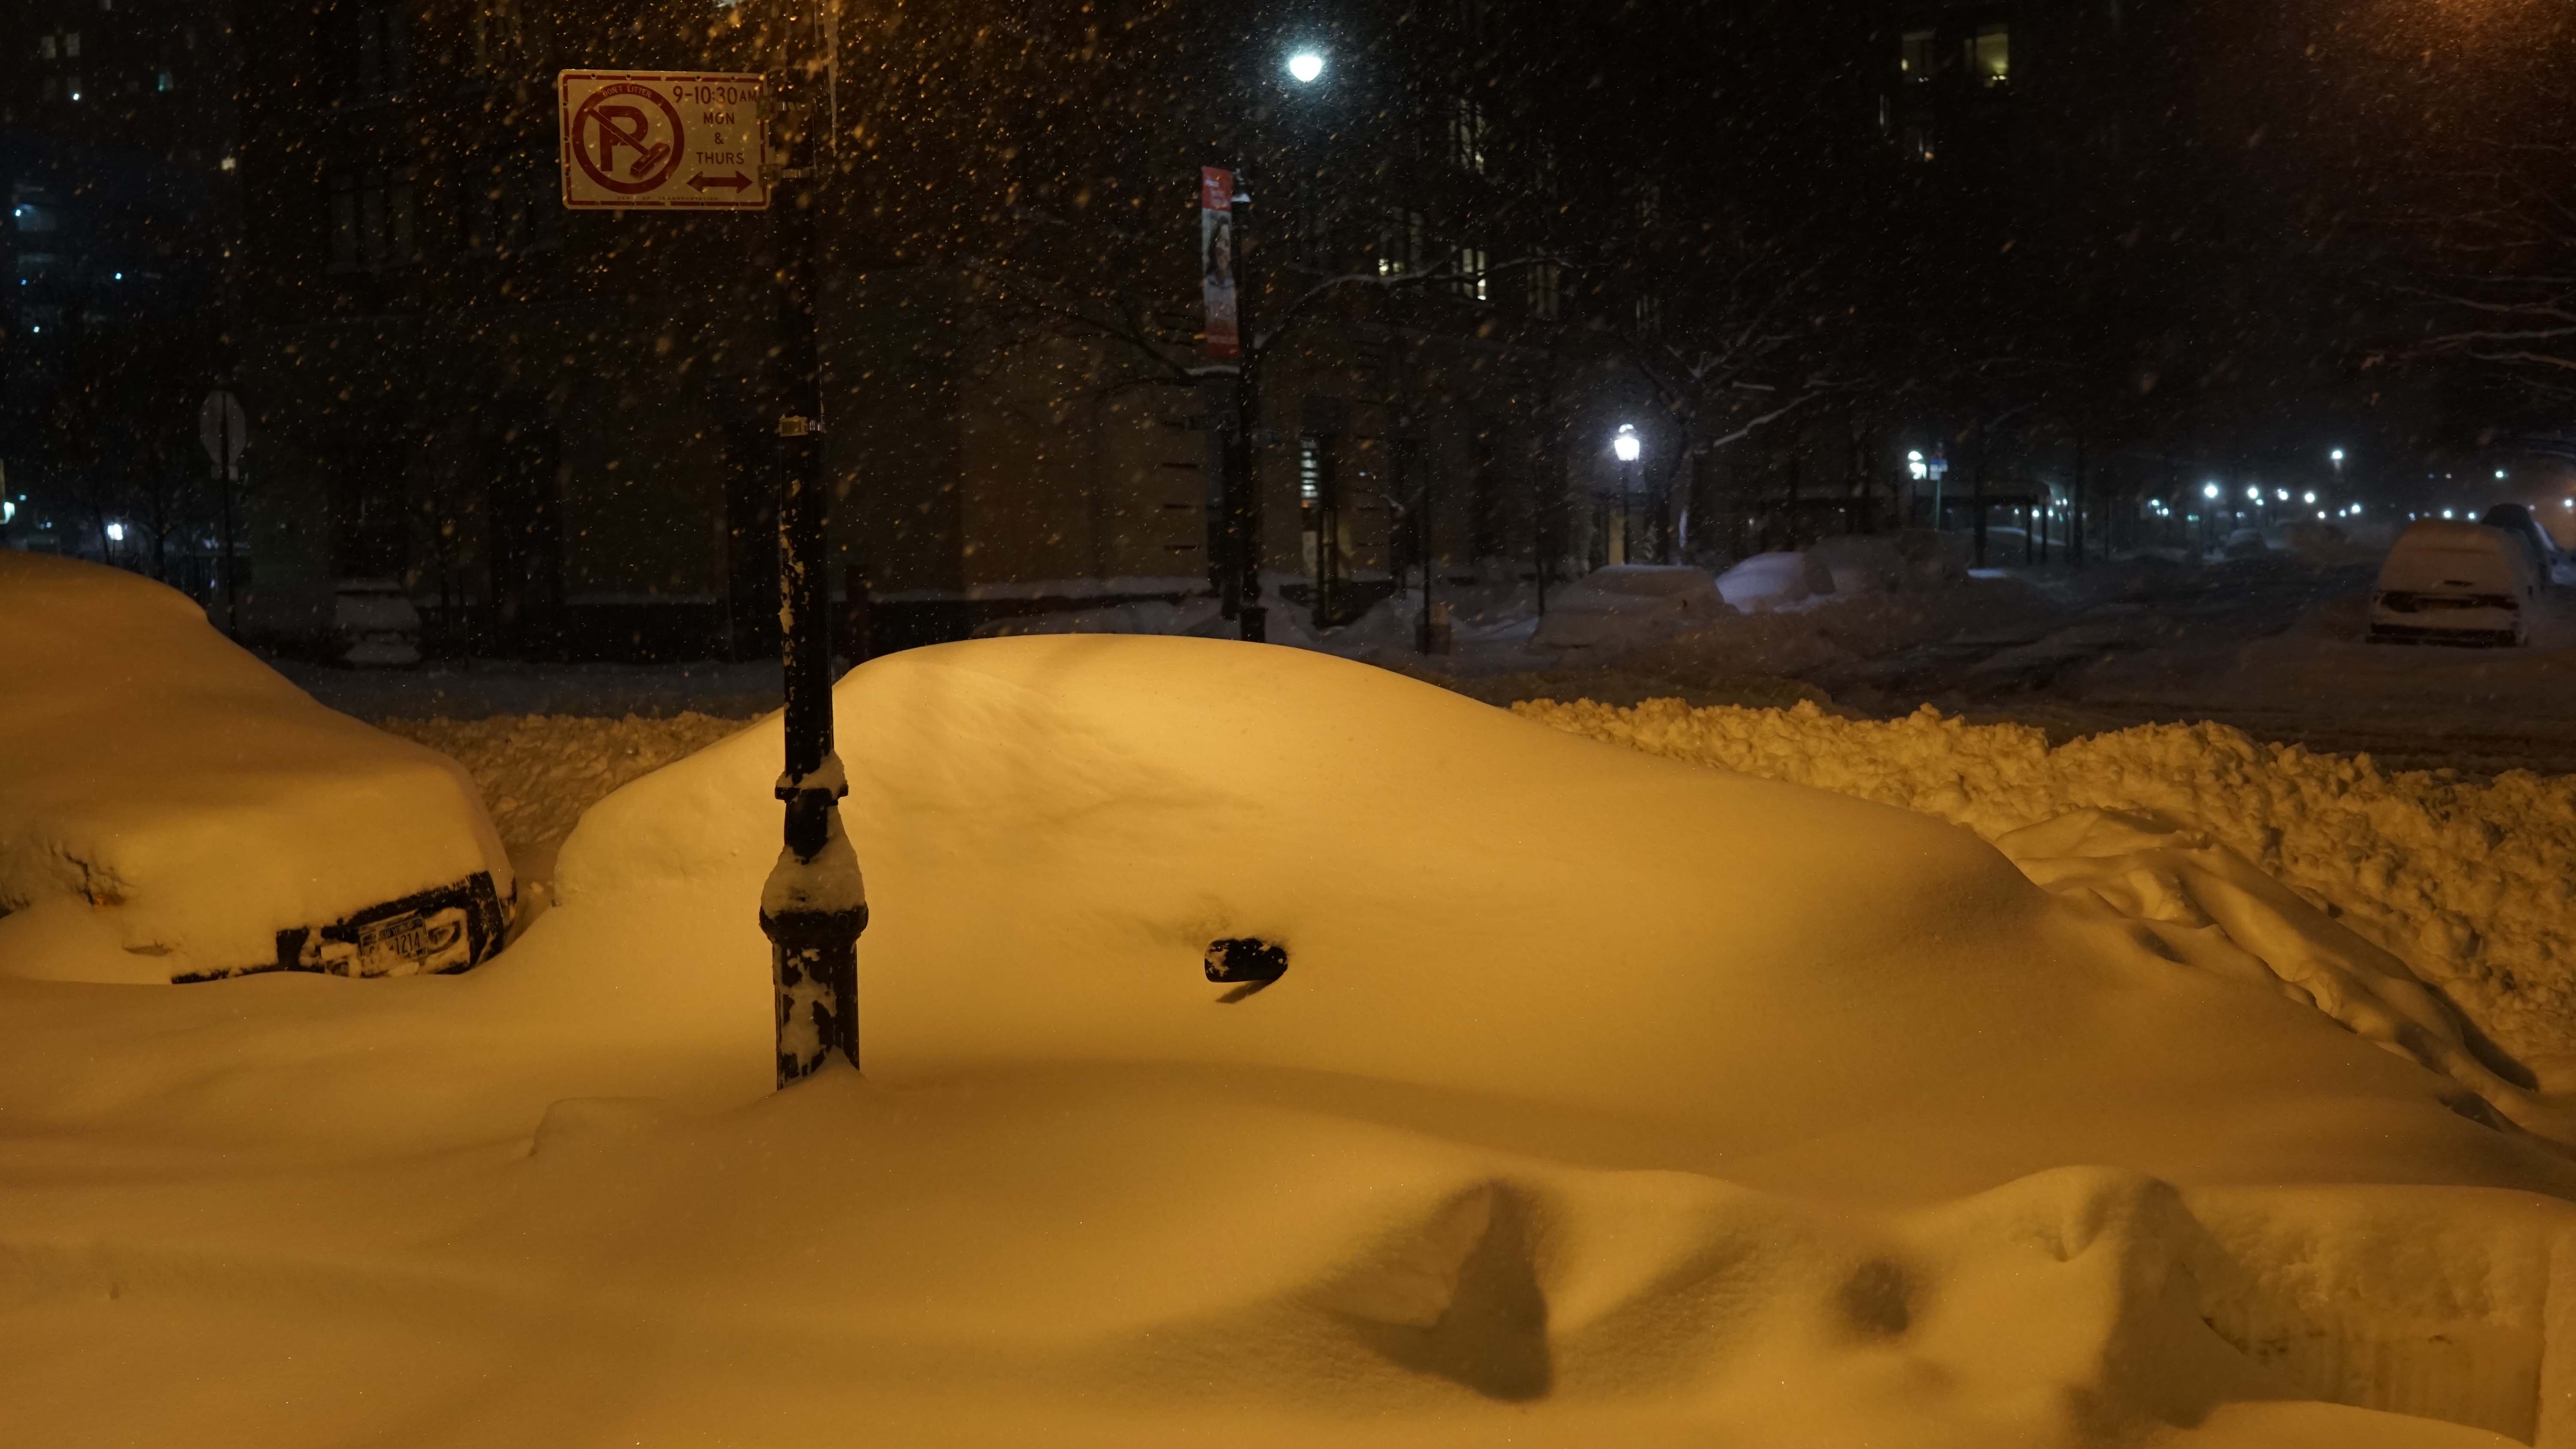 car under snow